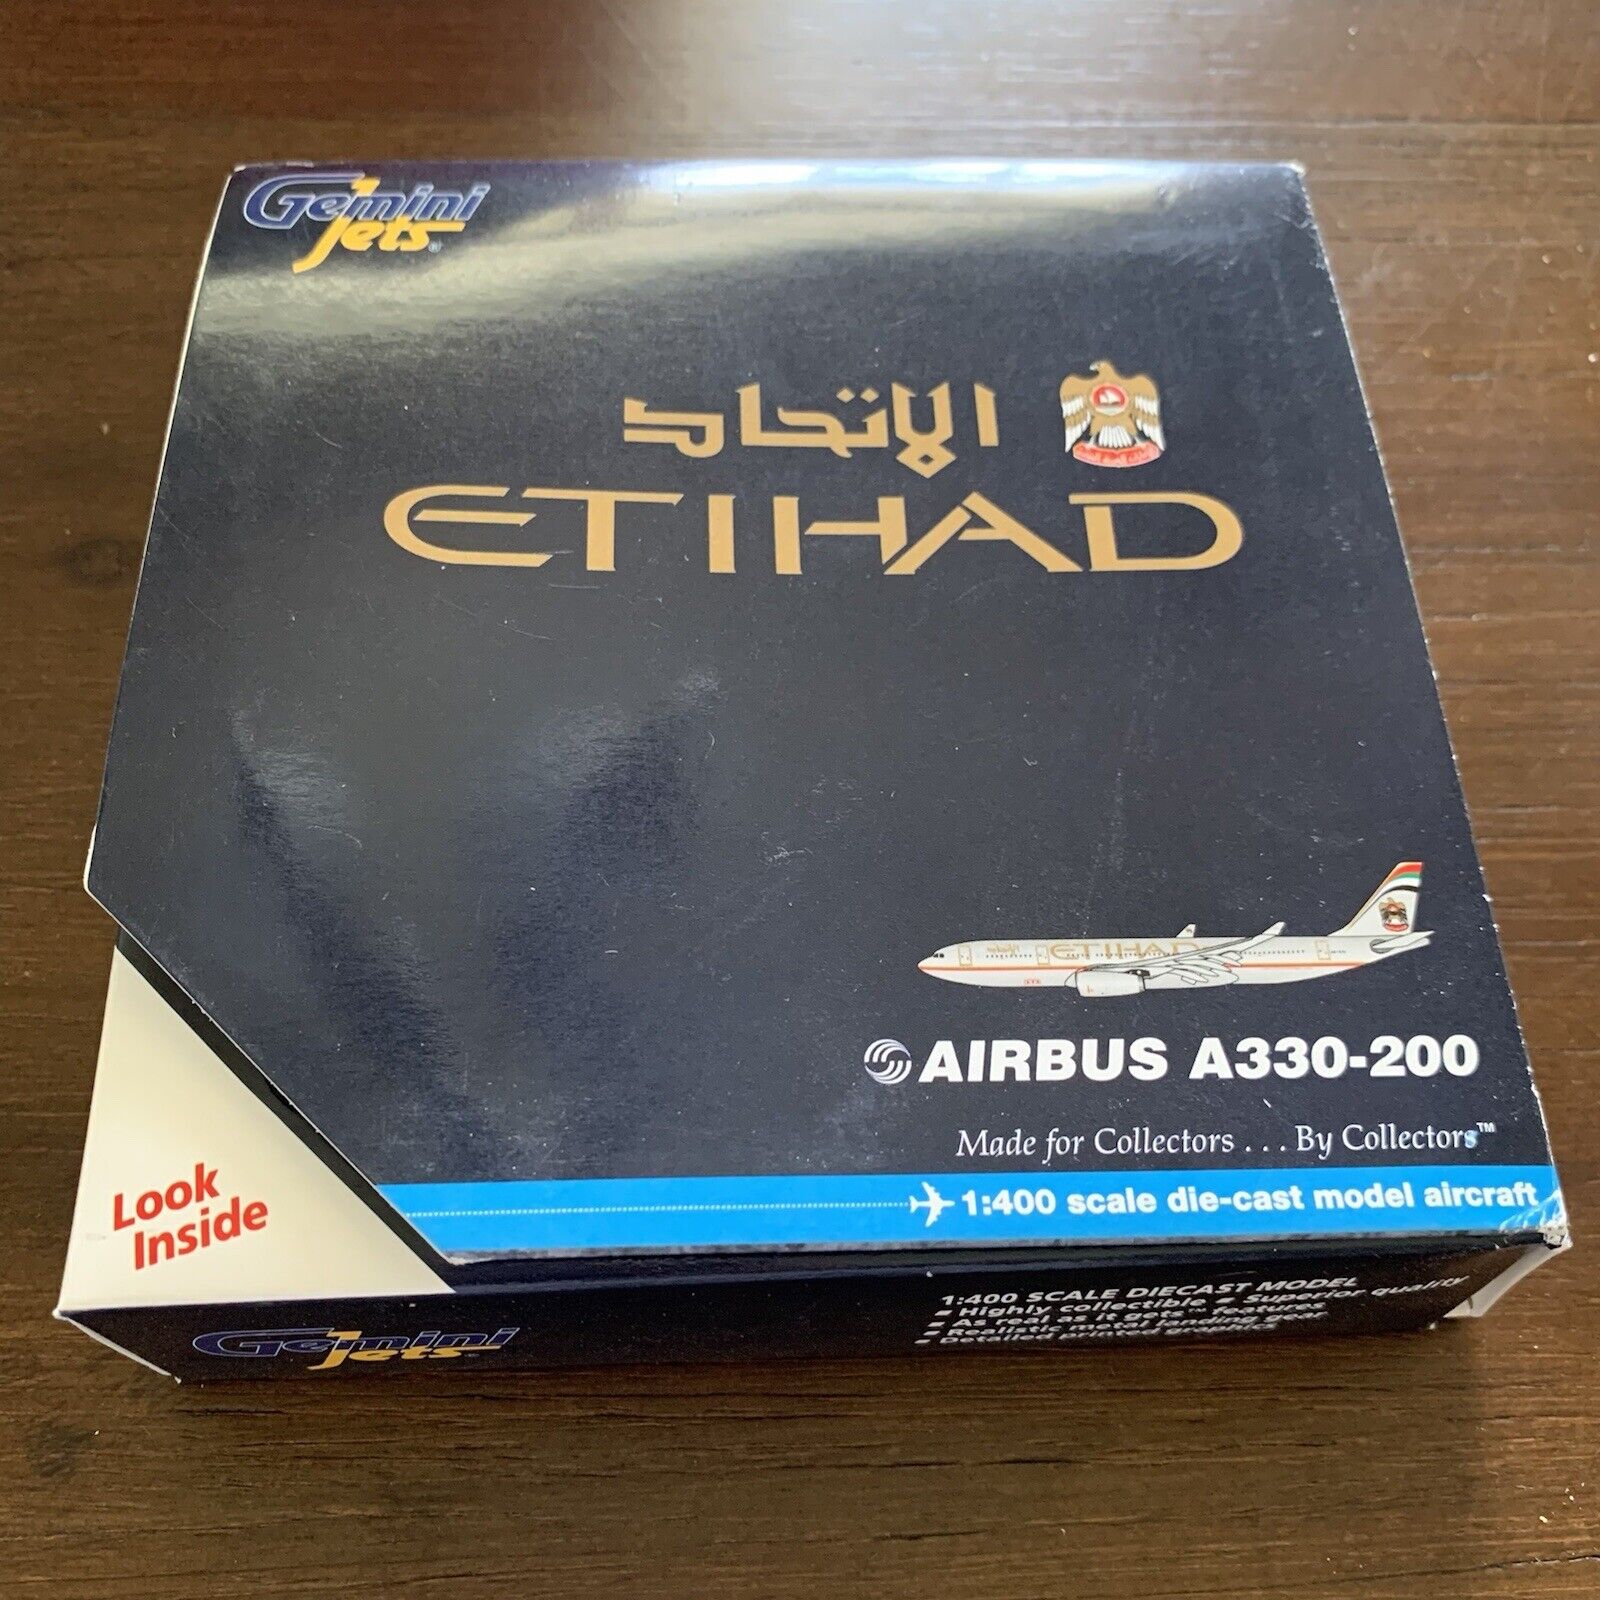 Gemini Jets Etihad Airbus A330-200 Box Only